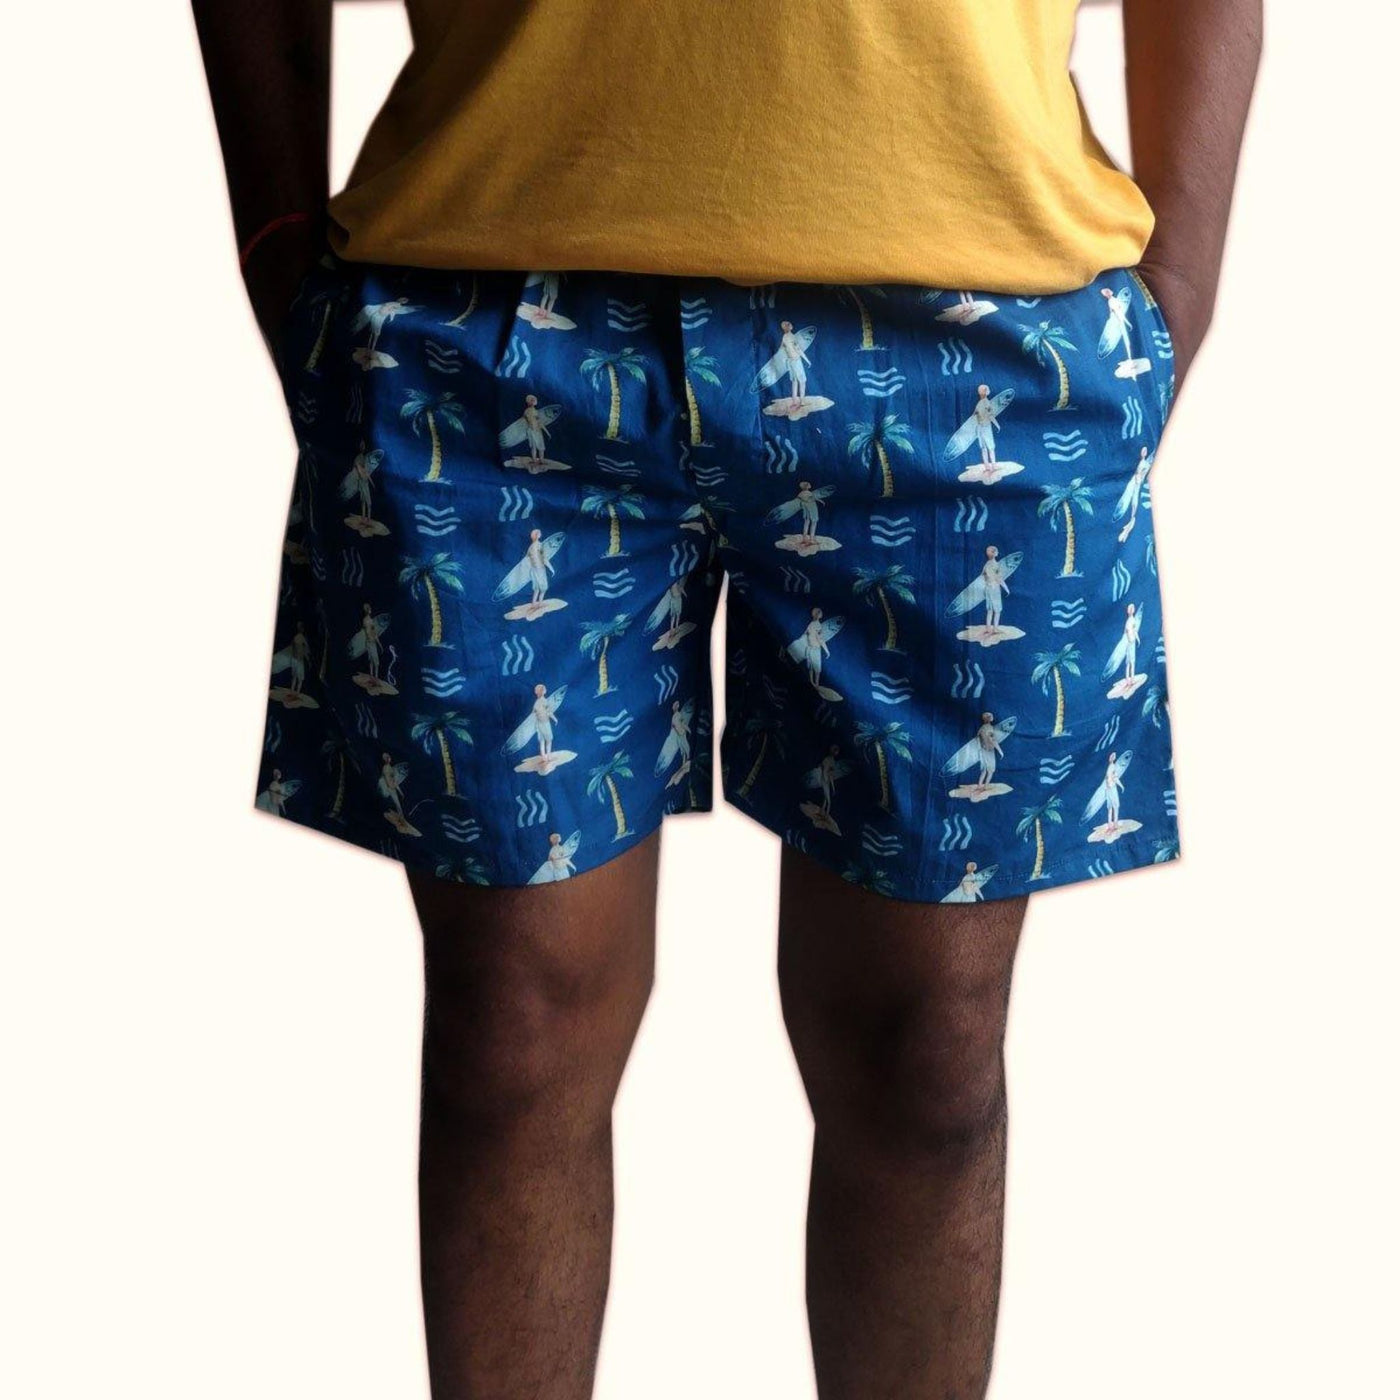 Boxer Shorts for Men - Surfer Paradise Joeycare